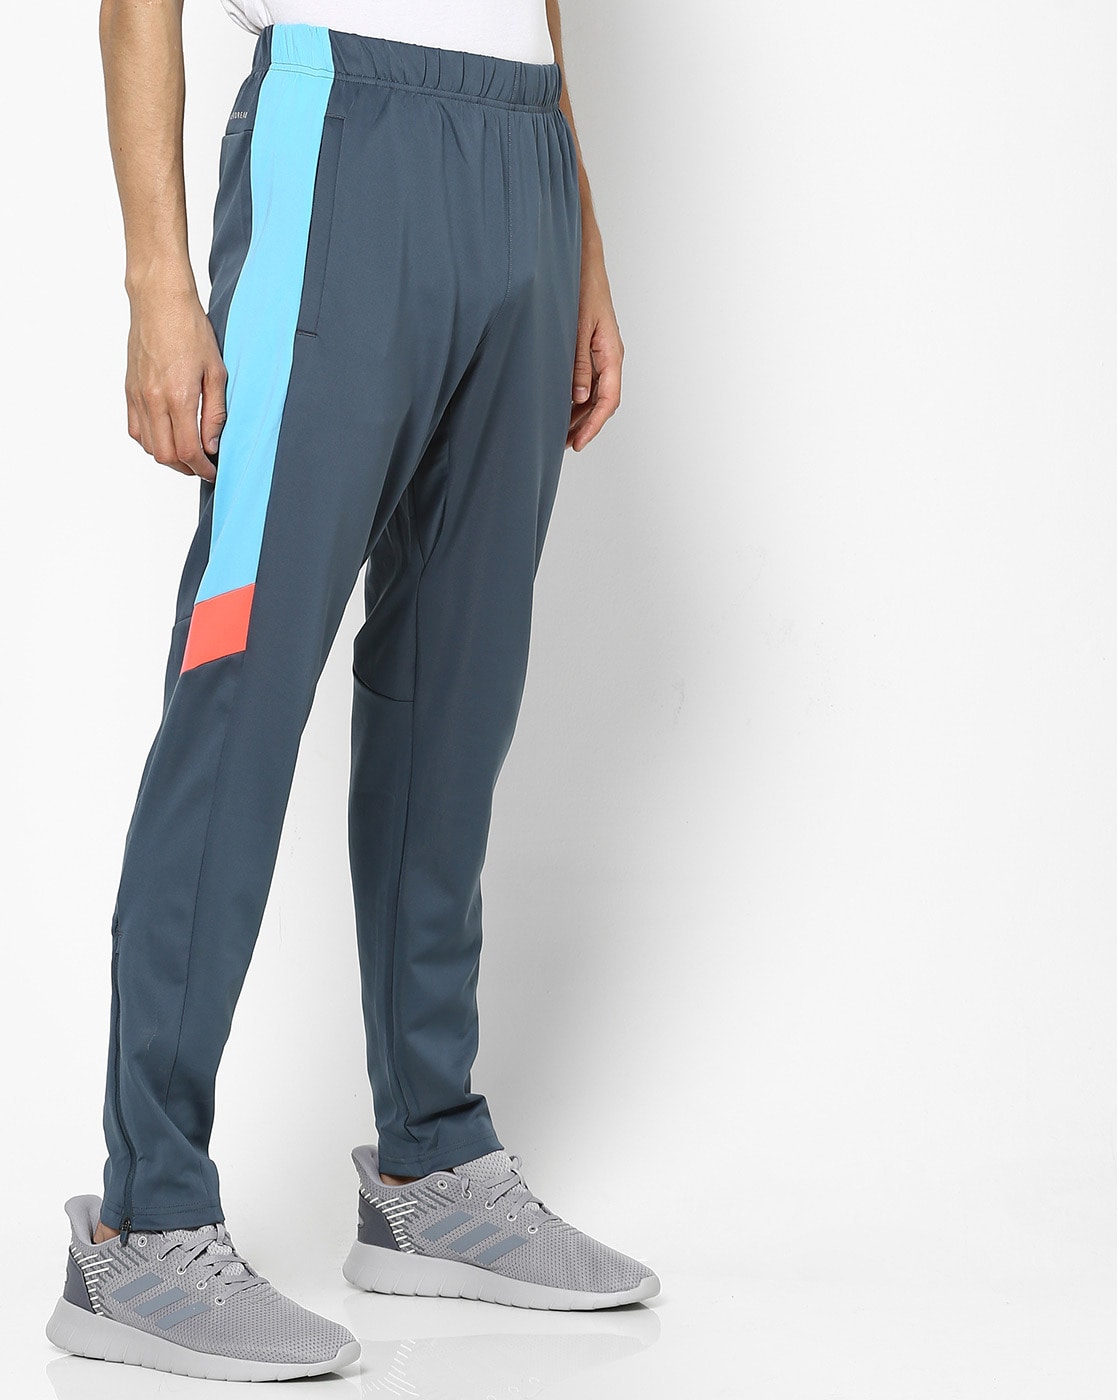 INDIA CRICKET ODI JERSEY MEN | Track pants outfit, Jersey design, Men